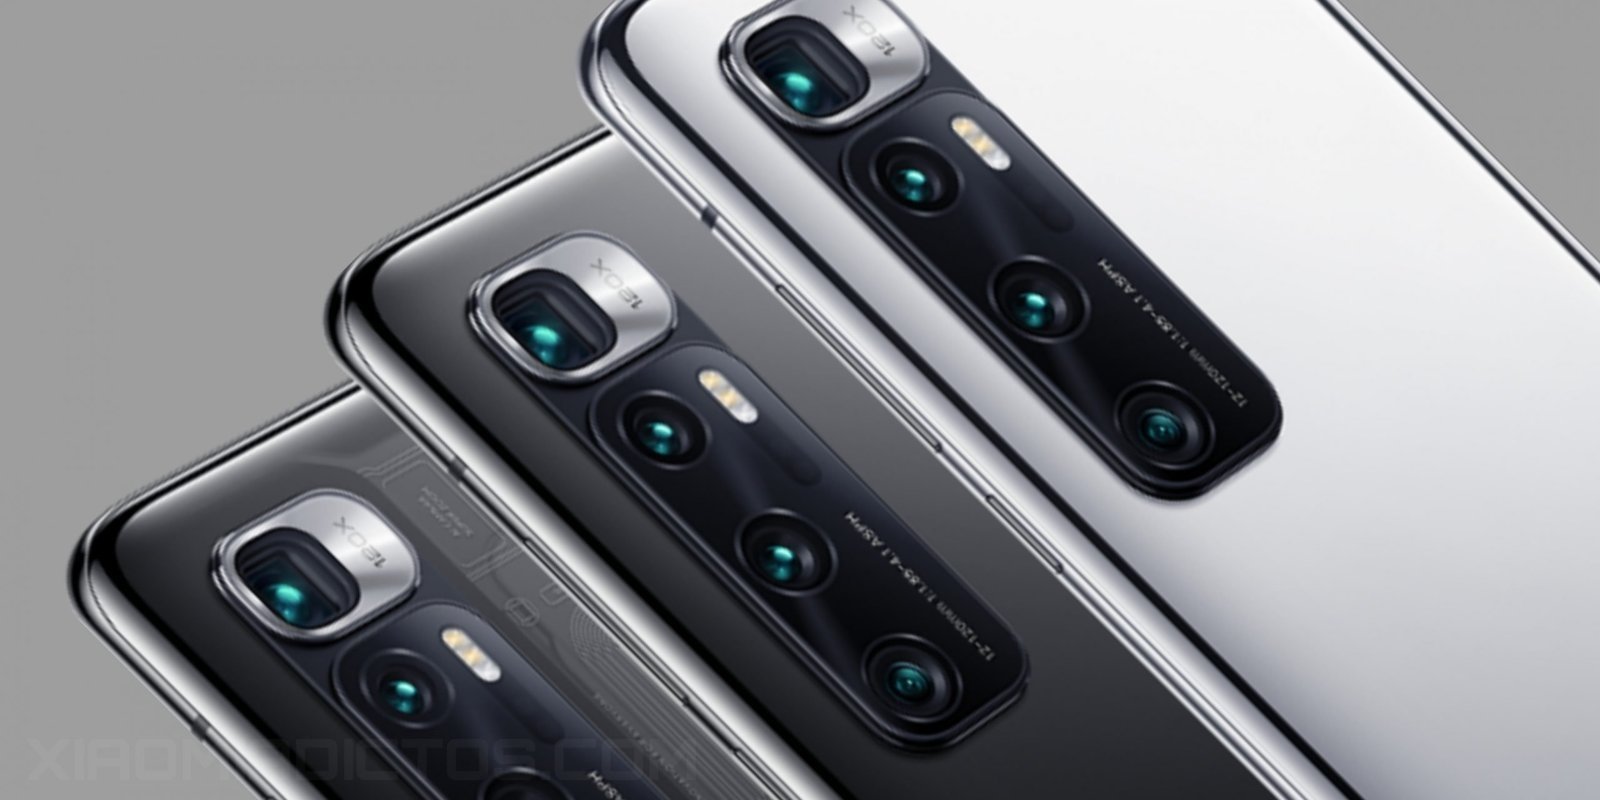 The rear cameras of the Xiaomi Mi 10S